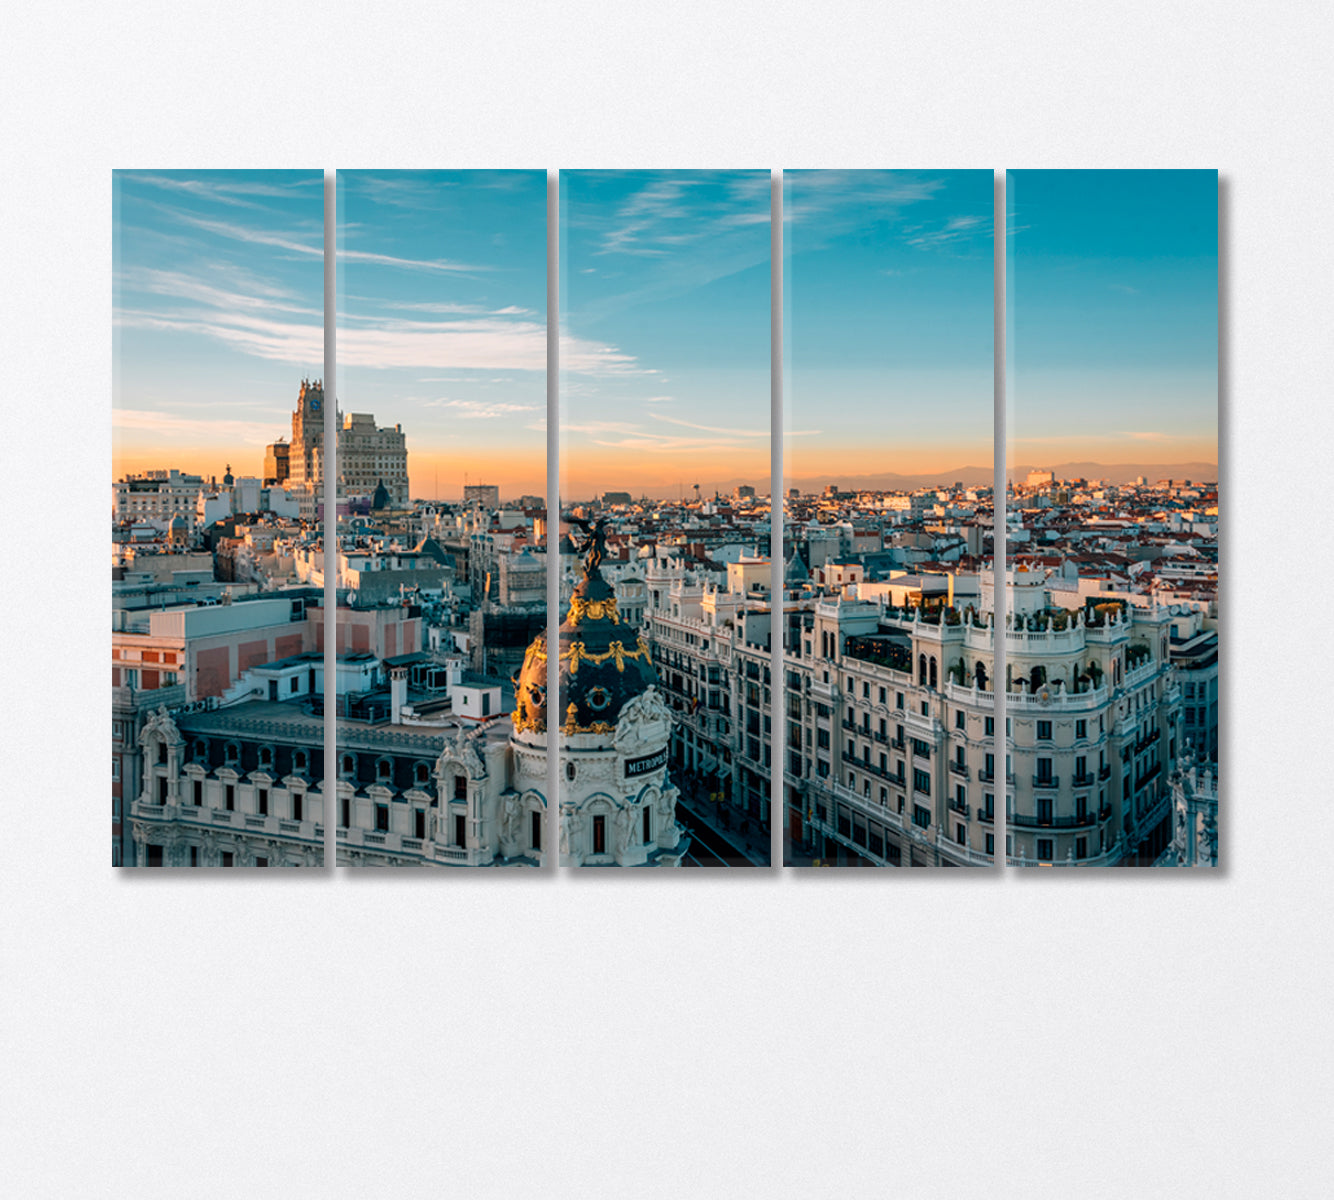 Metropolis Building and Gran Via Madrid Spain Canvas Print-Canvas Print-CetArt-5 Panels-36x24 inches-CetArt